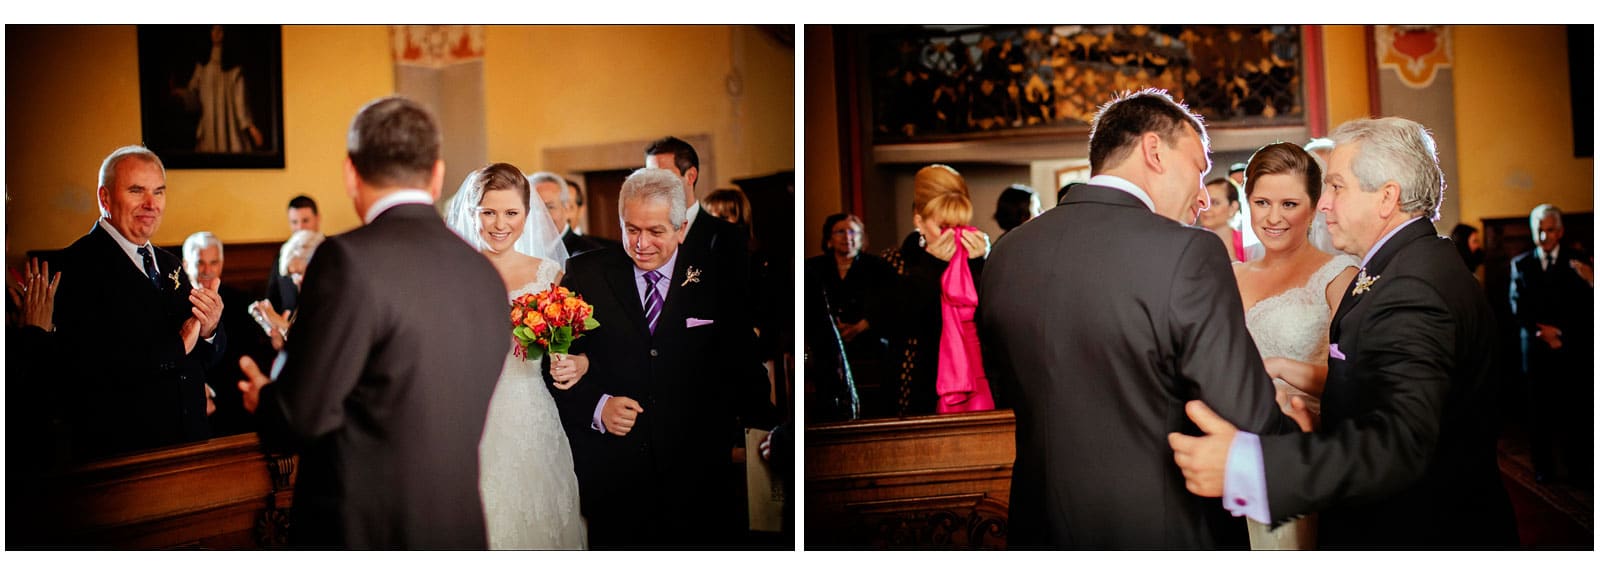 Castle Zbiroh Wedding / Paola & Alexei / wedding ceremony photography